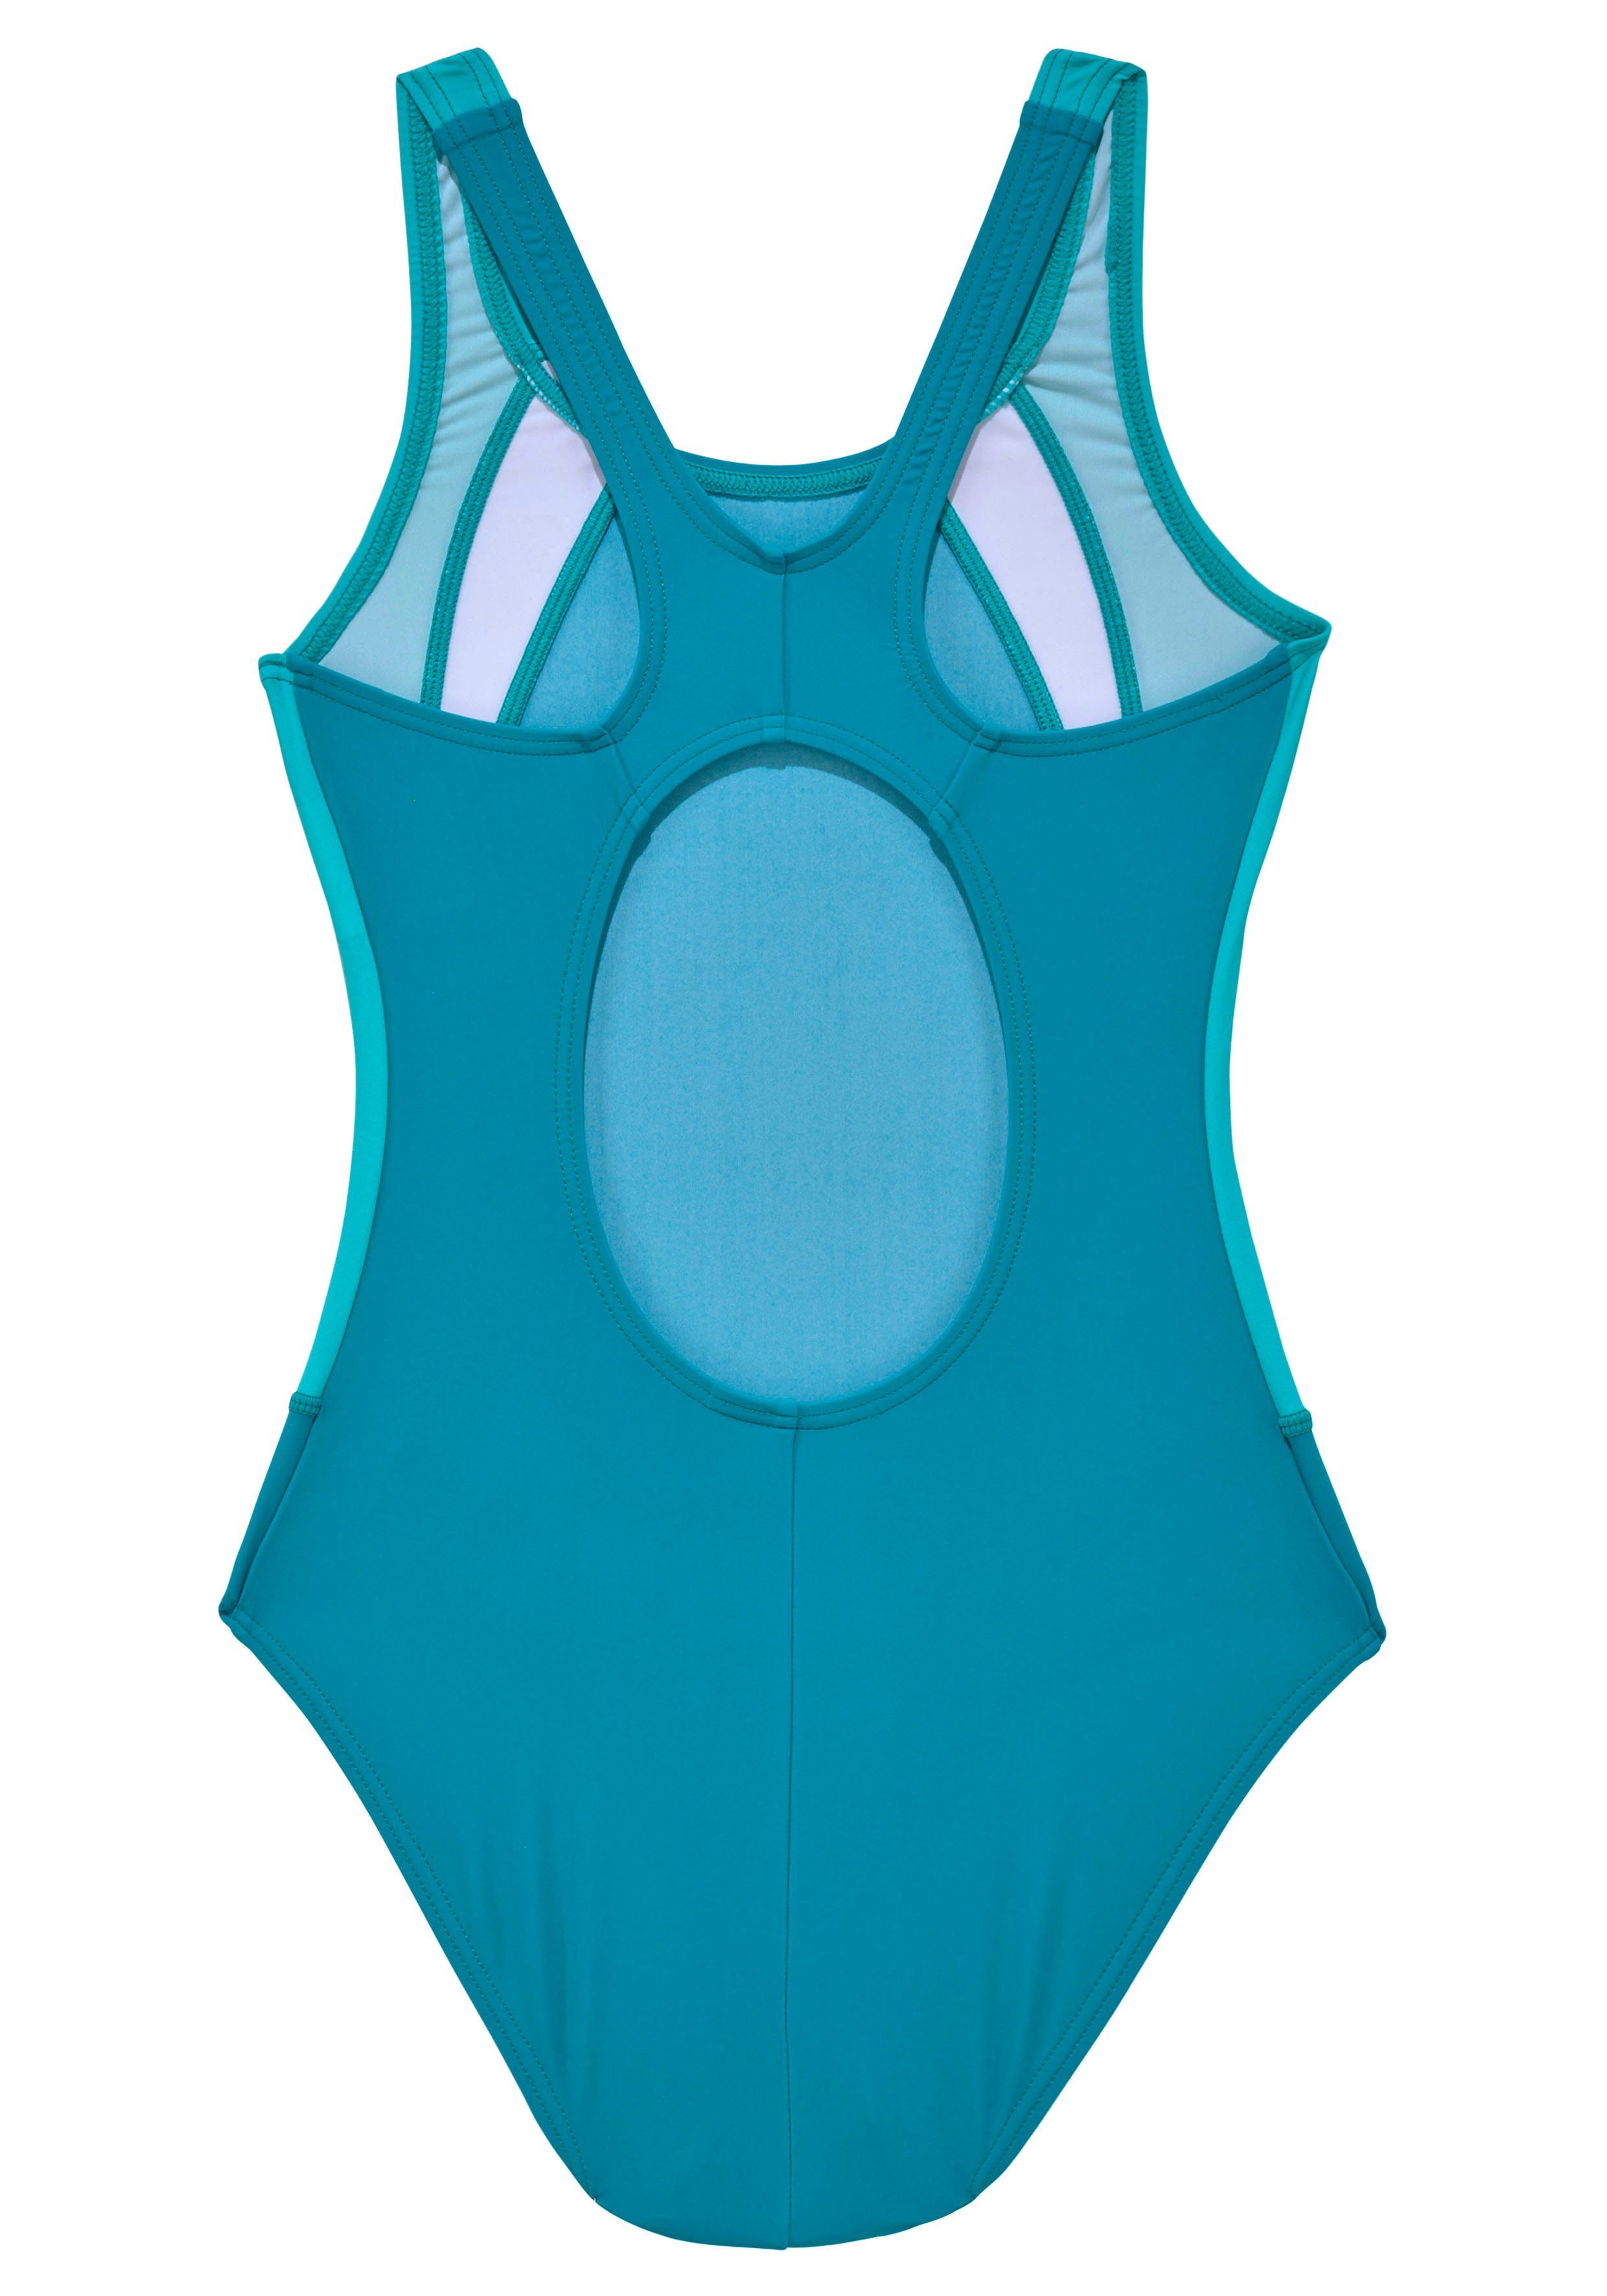 KangaROOS Farbmix sportlichen im Badeanzug türkis-blau